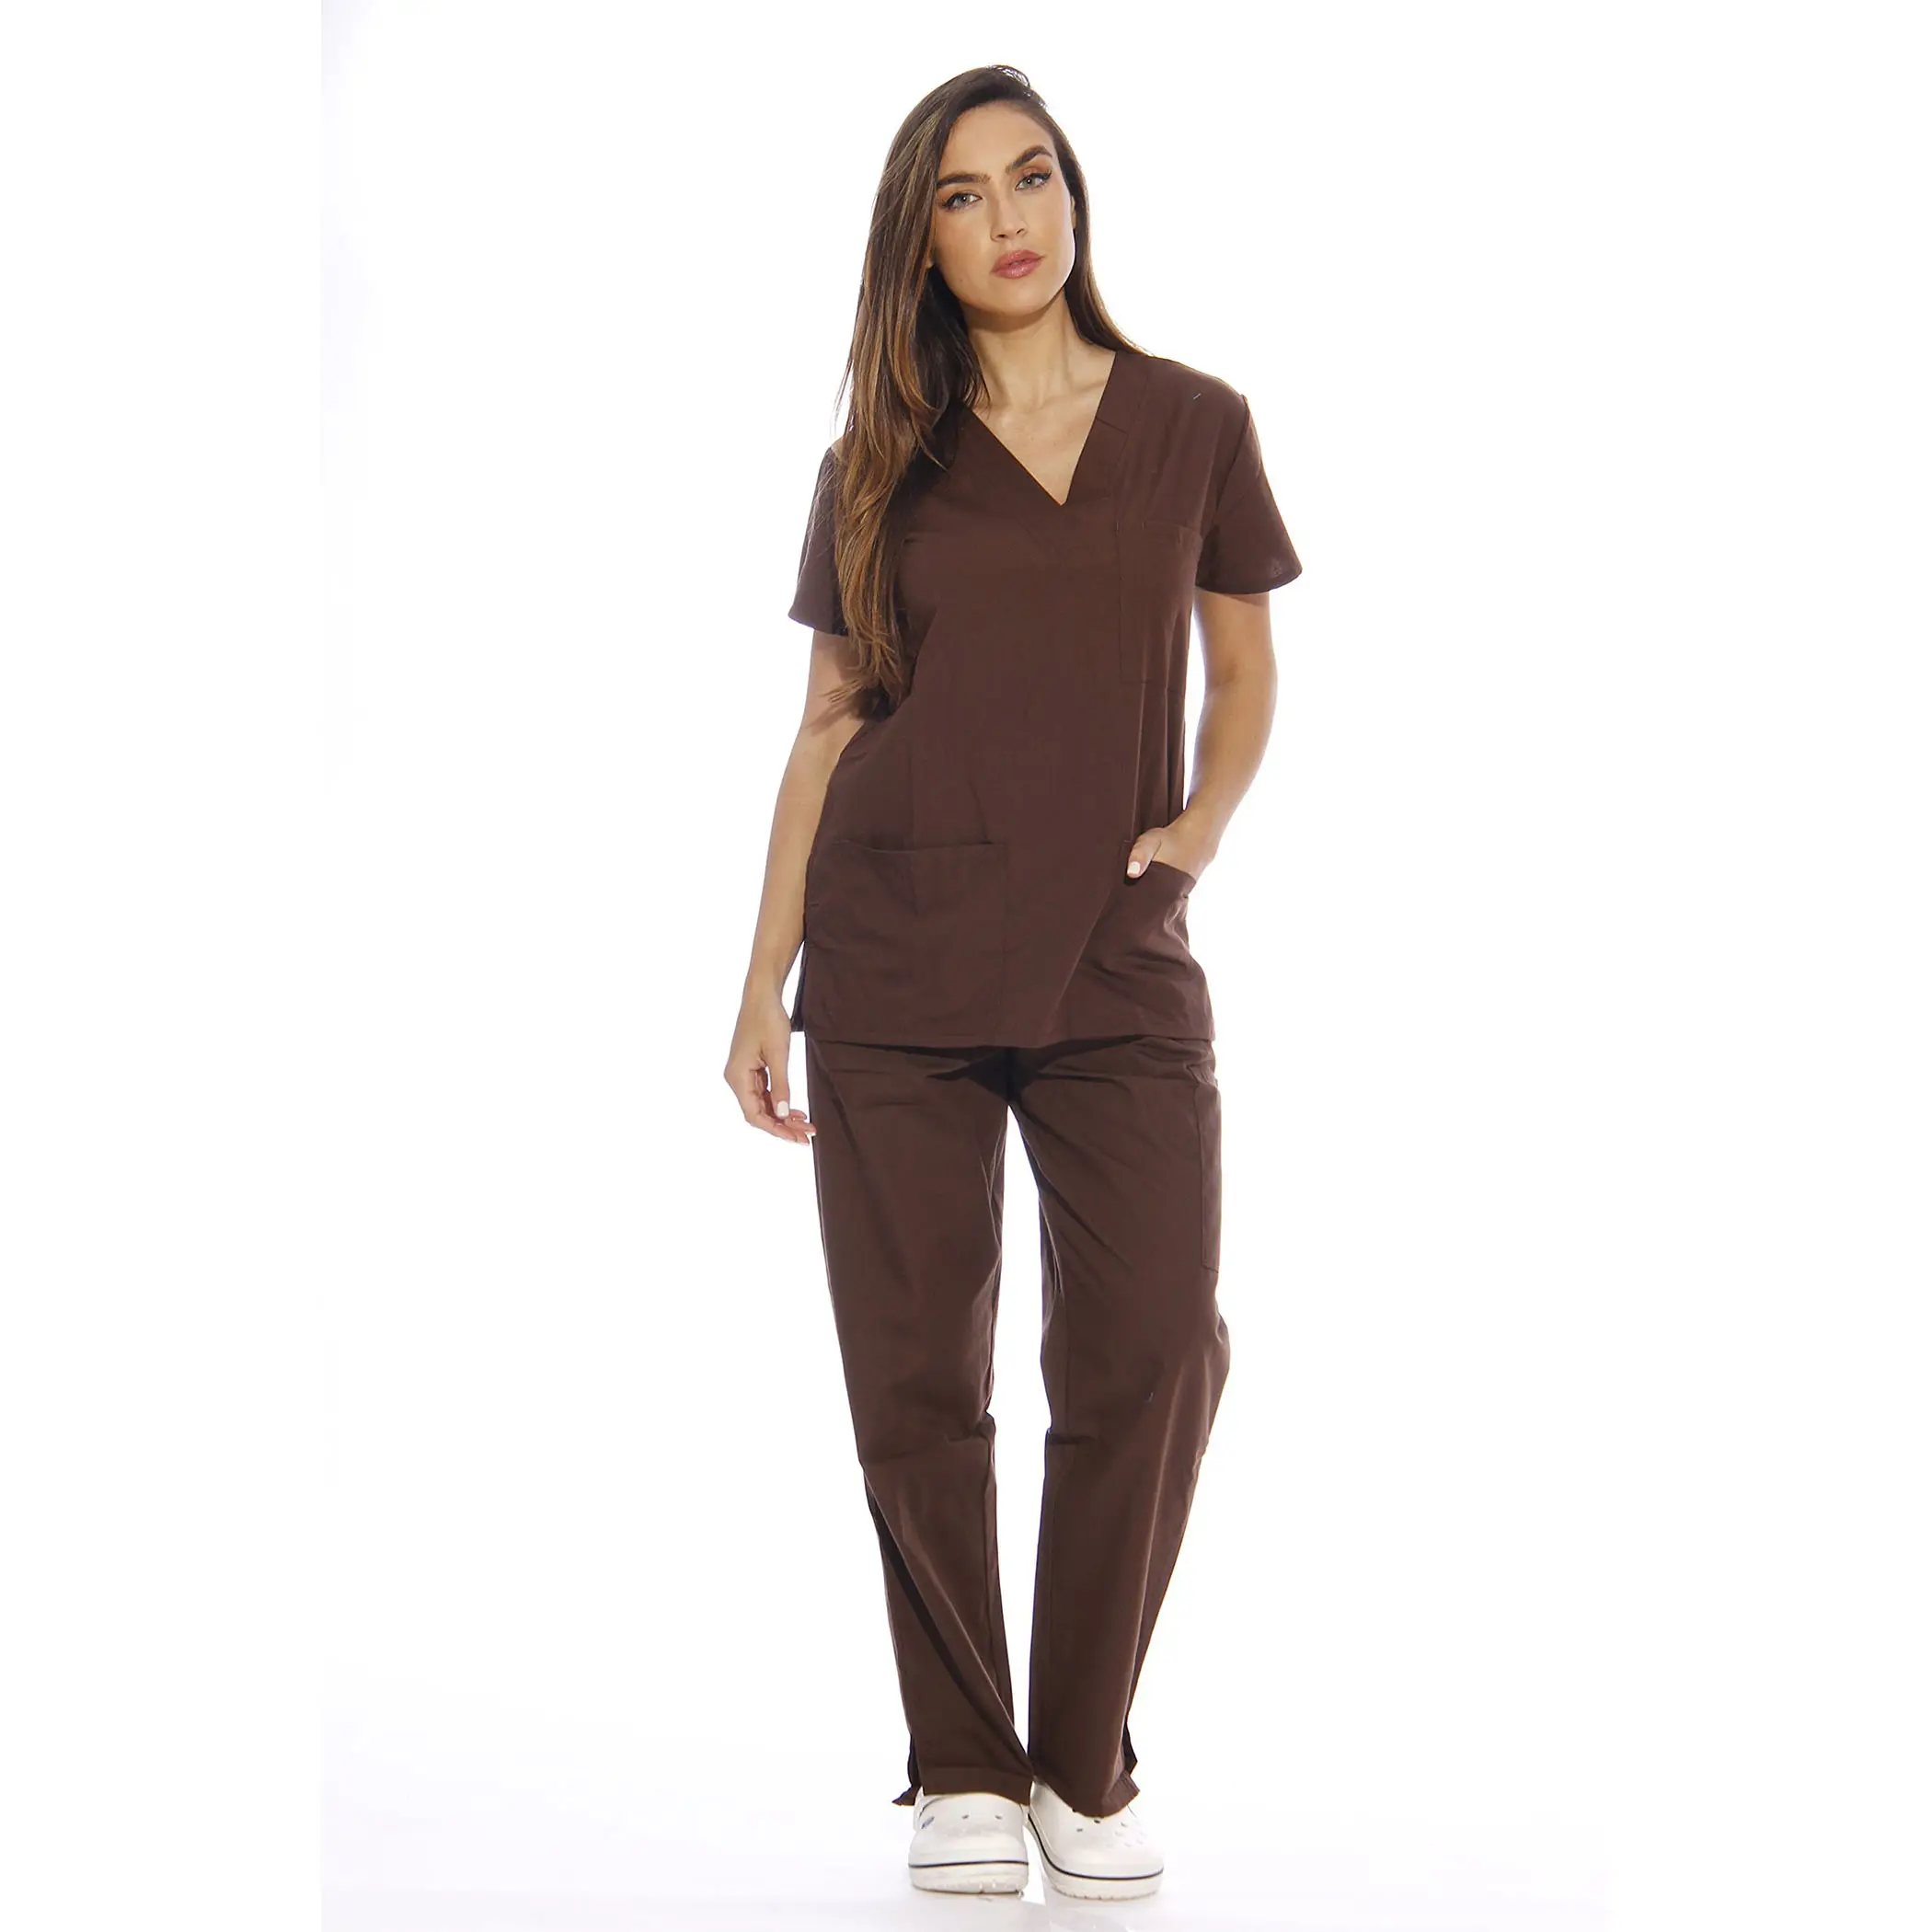 Wholesale Doctors And Nurses Female Best Quality Hot Sale Custom Scrubs Uniforms Women Suit Medical Clothing Customize Sizing